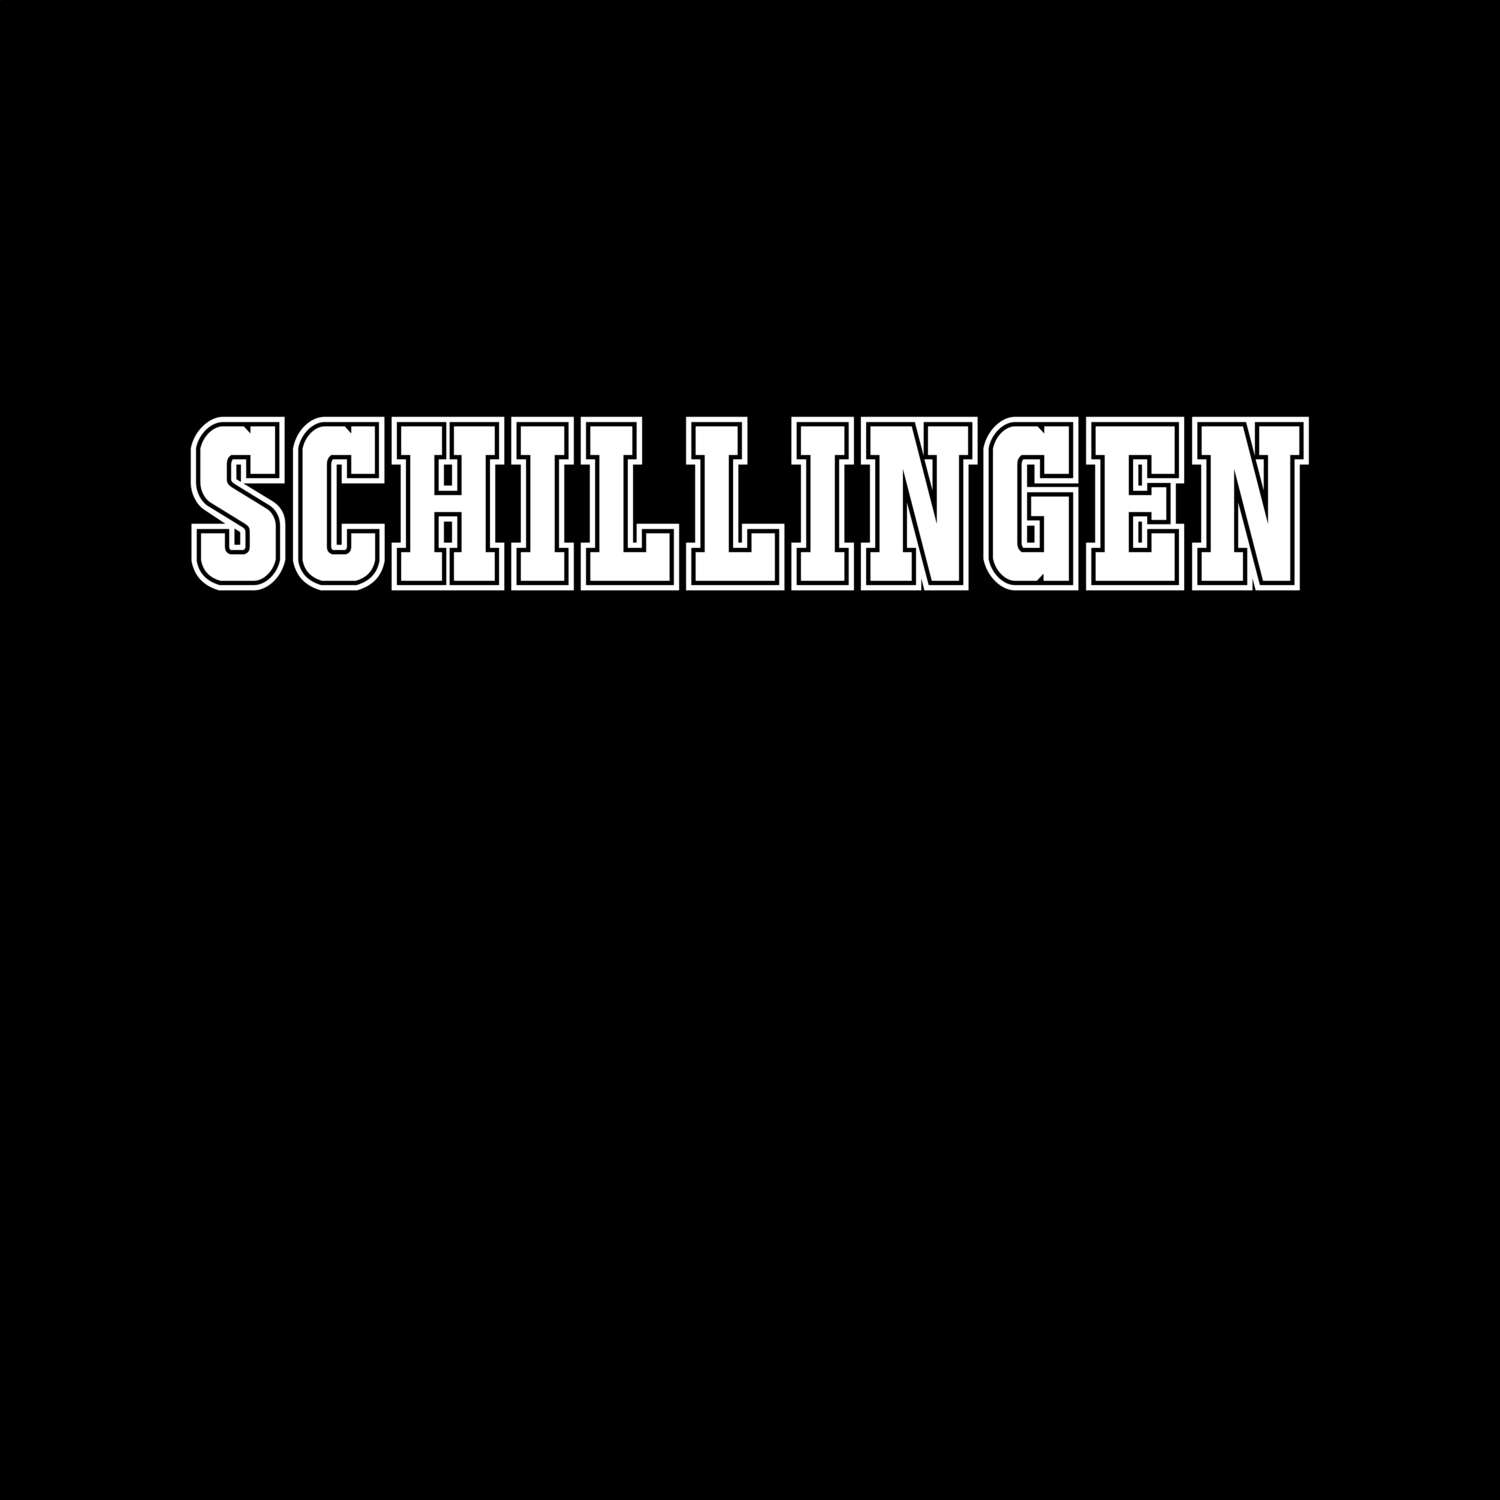 Schillingen T-Shirt »Classic«